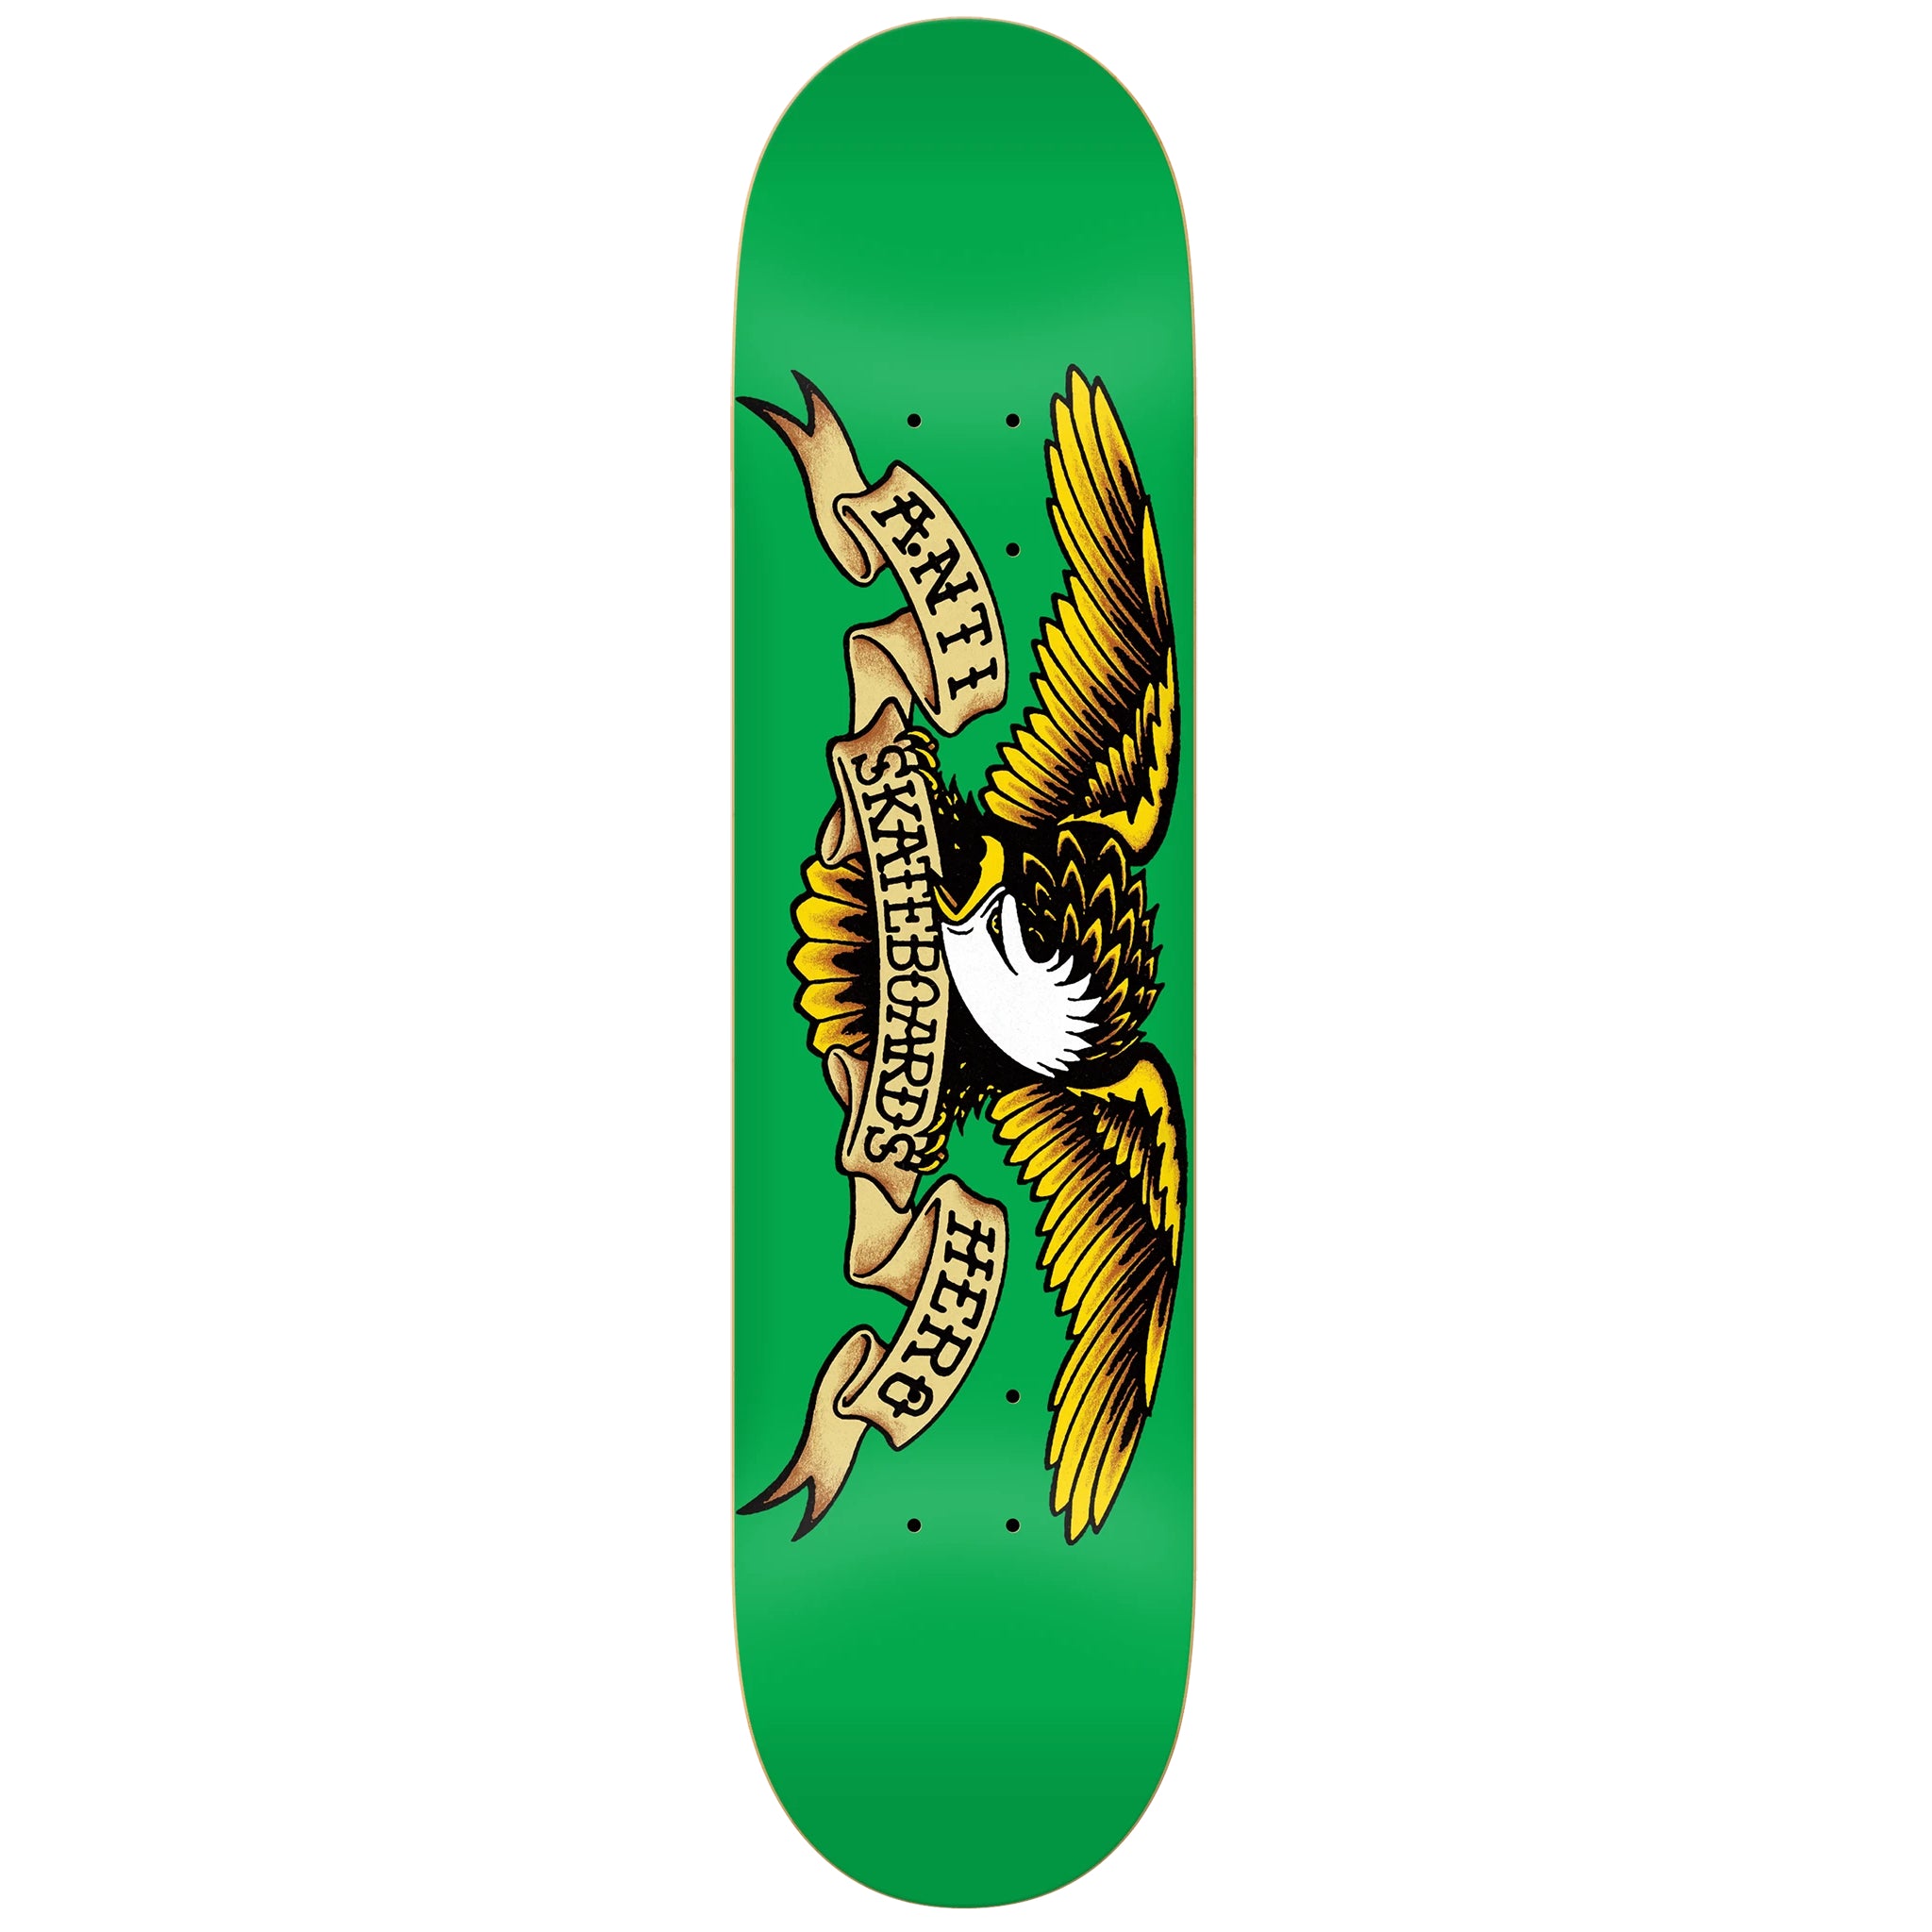 Green Classic Eagle antihero Skateboard deck